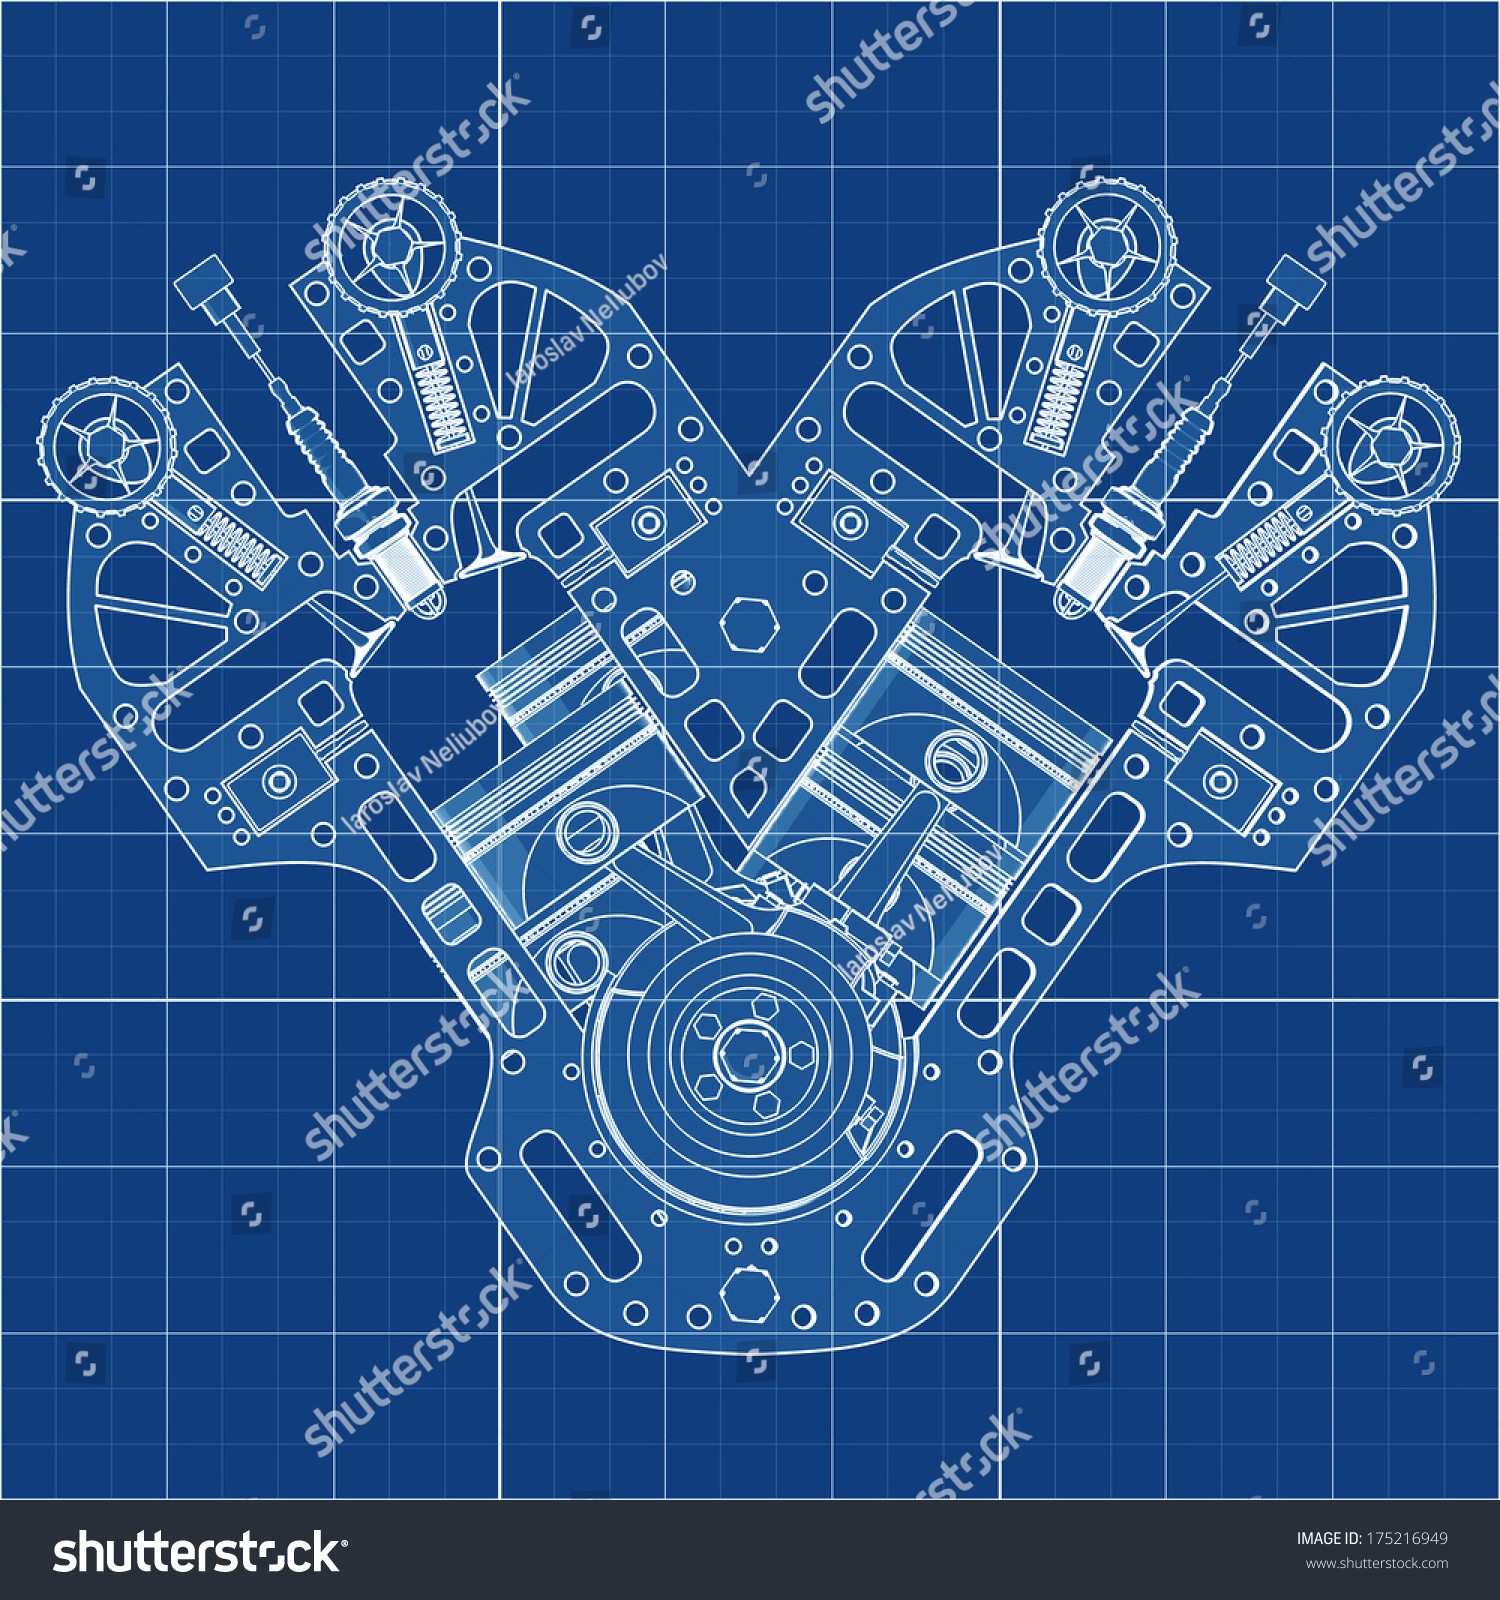 Animated V8 Engine Diagram V 8 Car Engine Cad Cartoon White Stock Illustration Of Animated V8 Engine Diagram